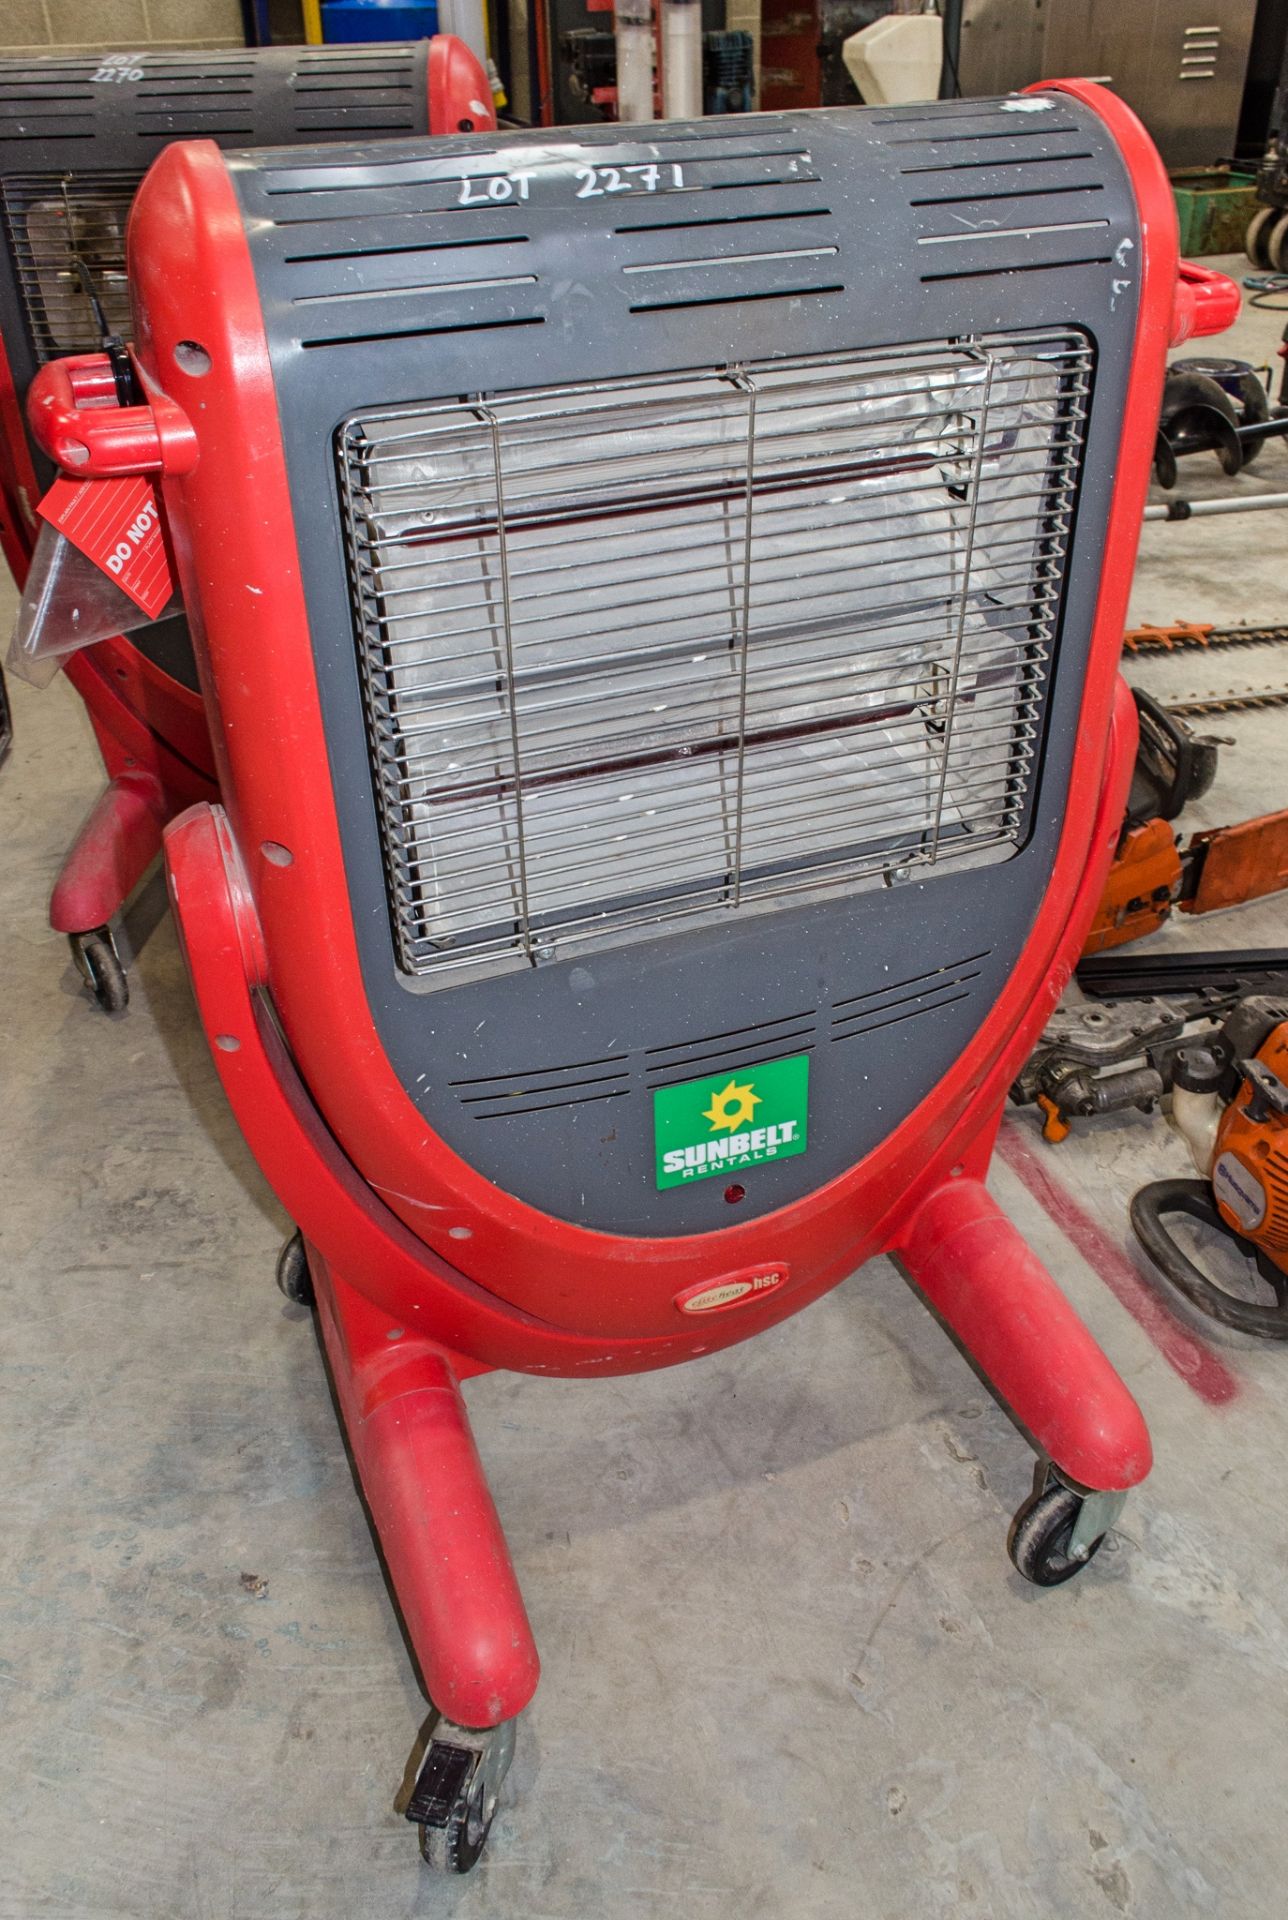 Elite Heat 240v infrared heater A720191